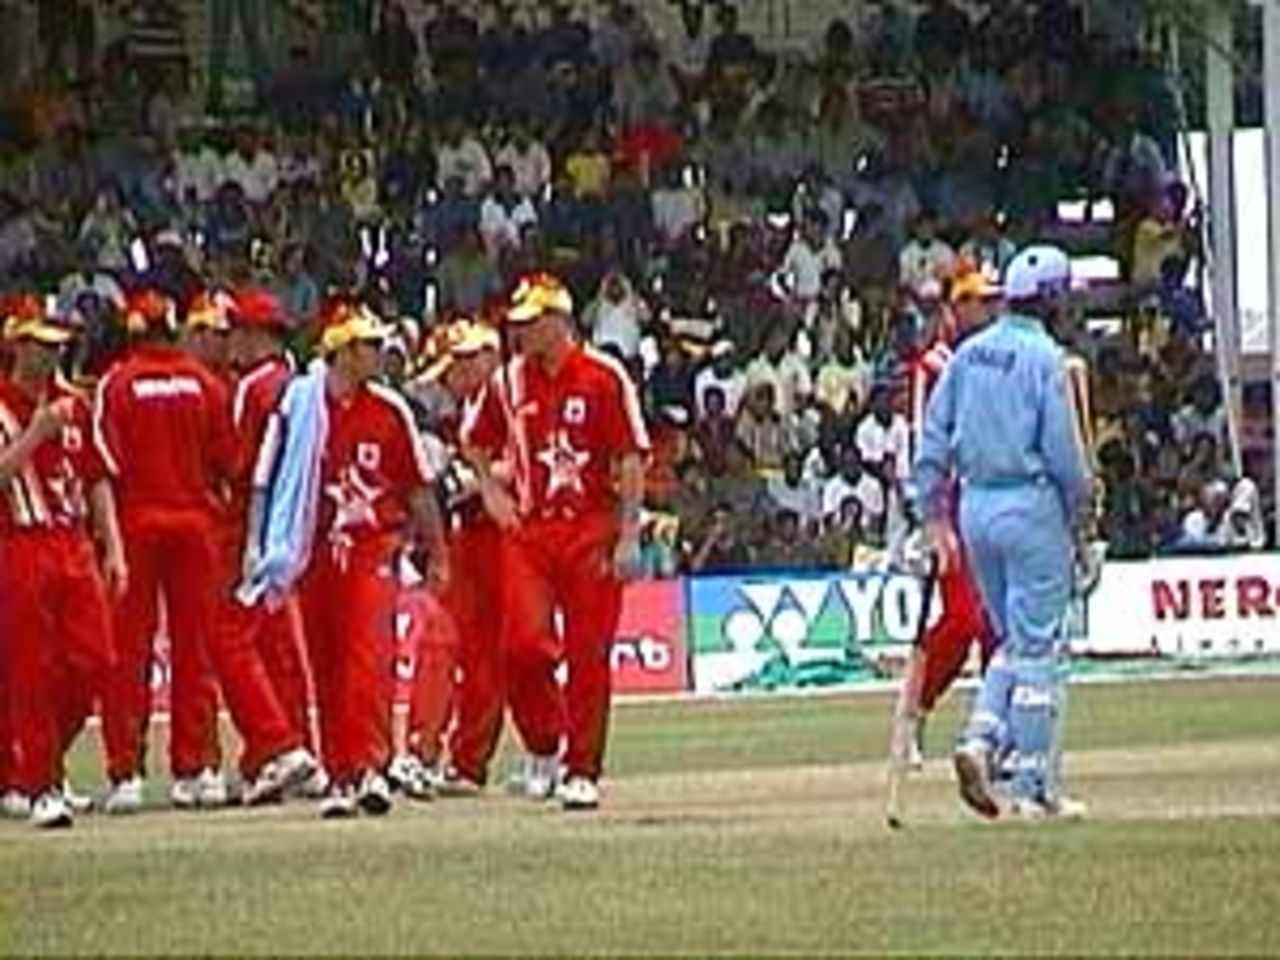 The Zimbabwe team gather around during a drinks break as Dravid waits, India v Zimbabwe (2nd ODI), Coca-Cola Singapore Challenge, 1999-2000, Kallang Ground, Singapore, 4 Sep 1999